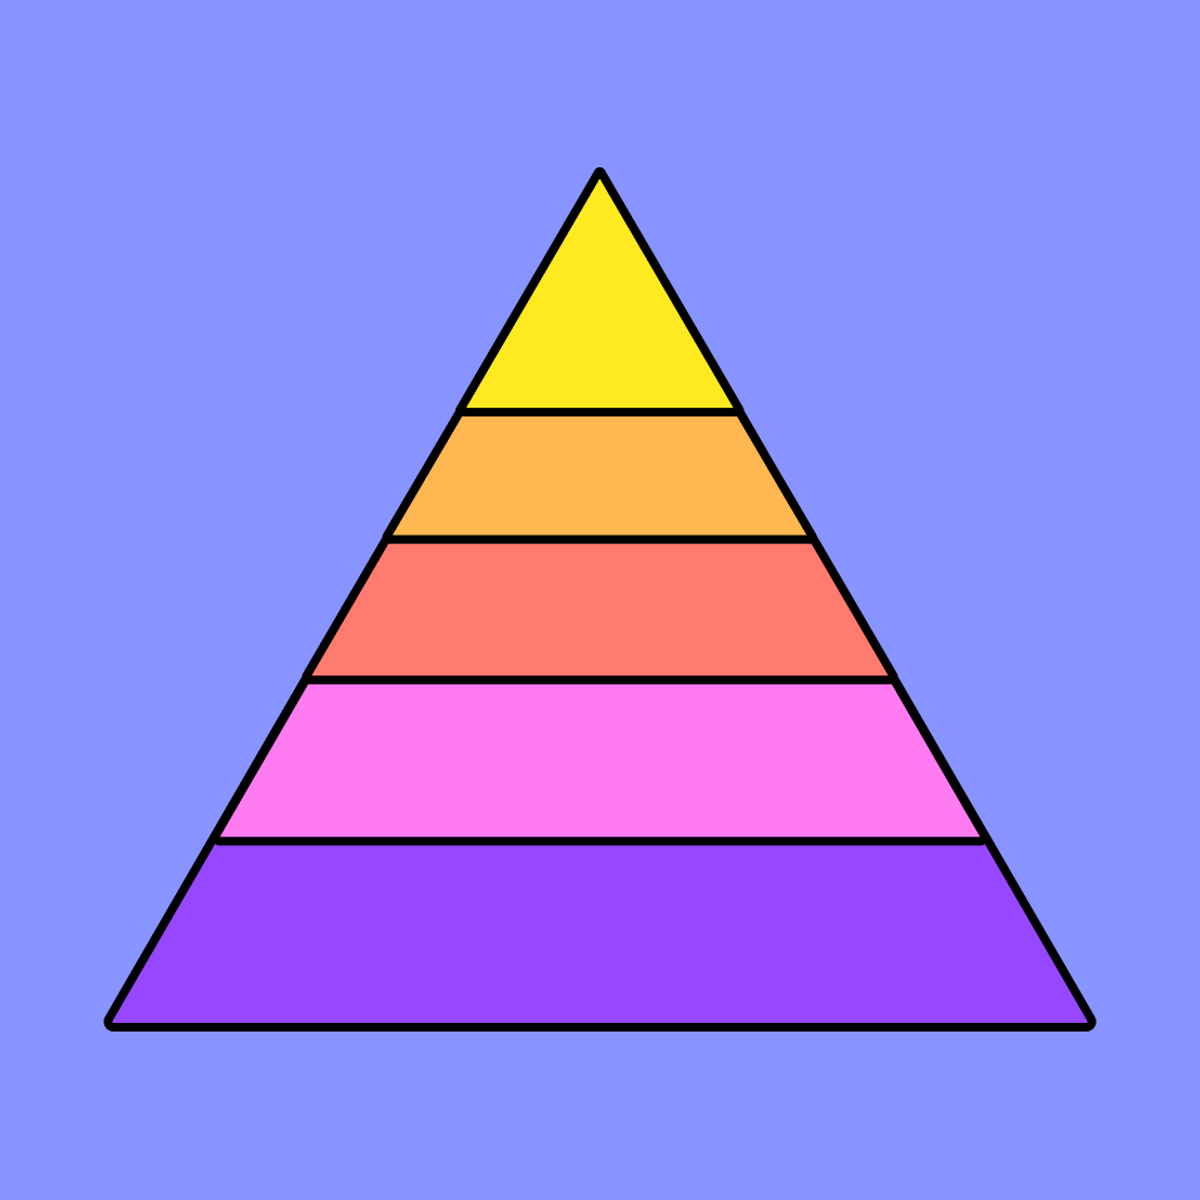 Free Brand Pyramid Templates